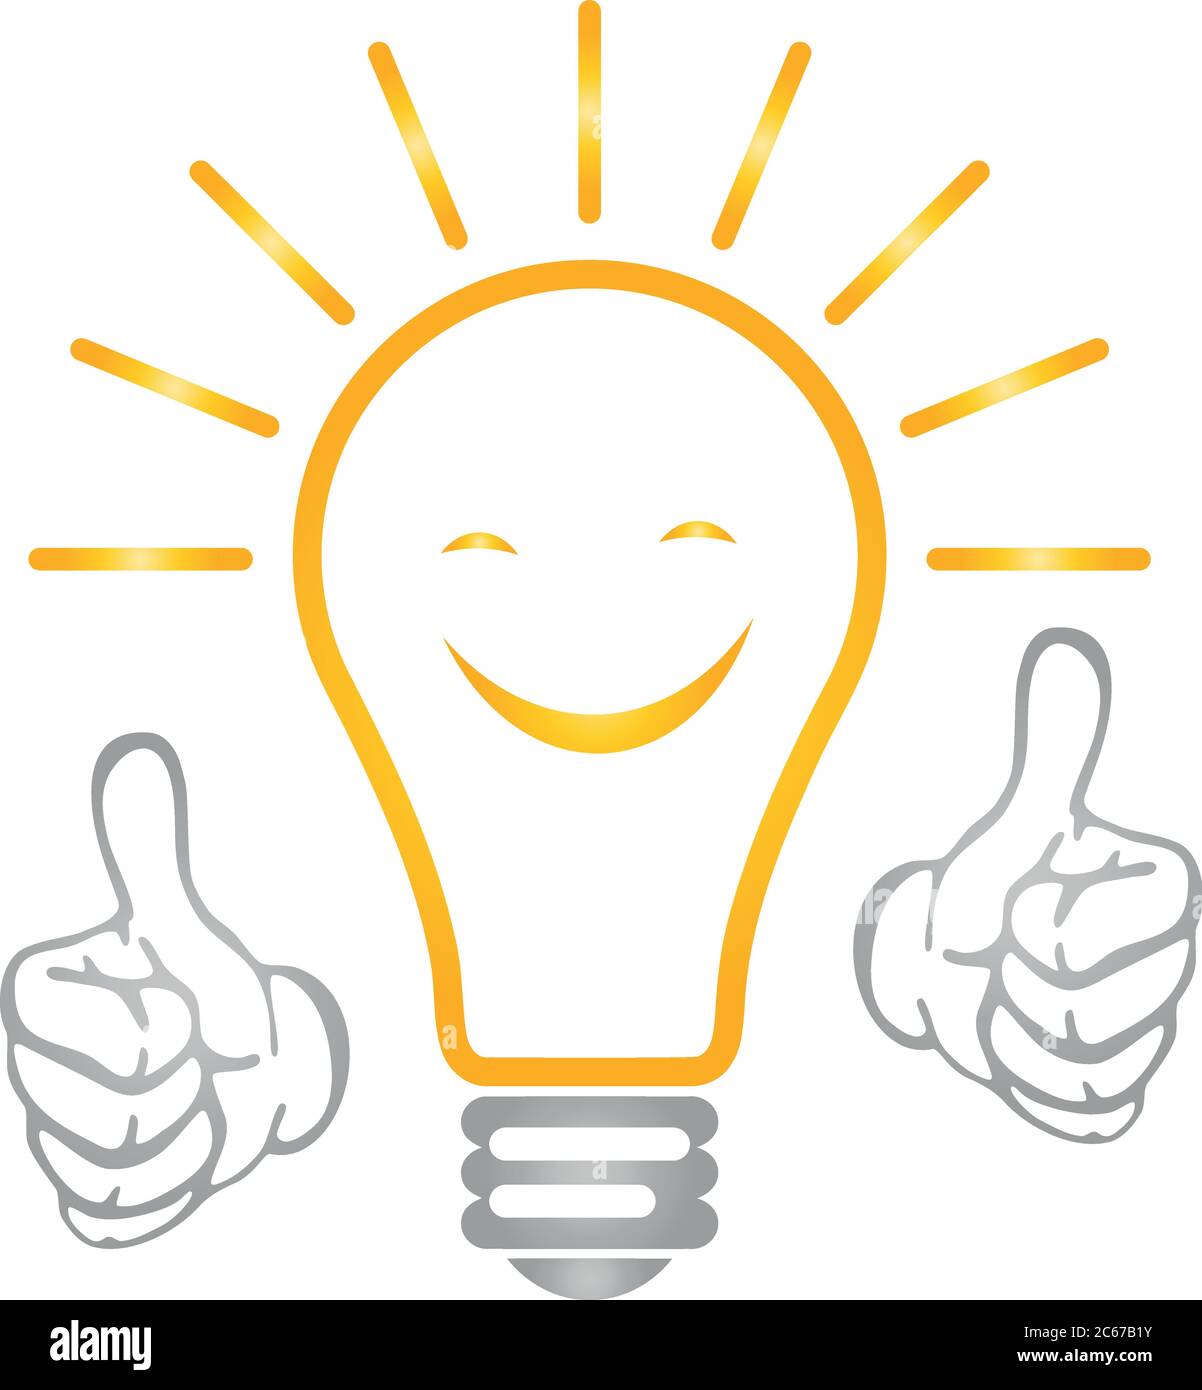 Lampe, Elektriker, Idee, Logo, Ikone Stock-Vektorgrafik - Alamy